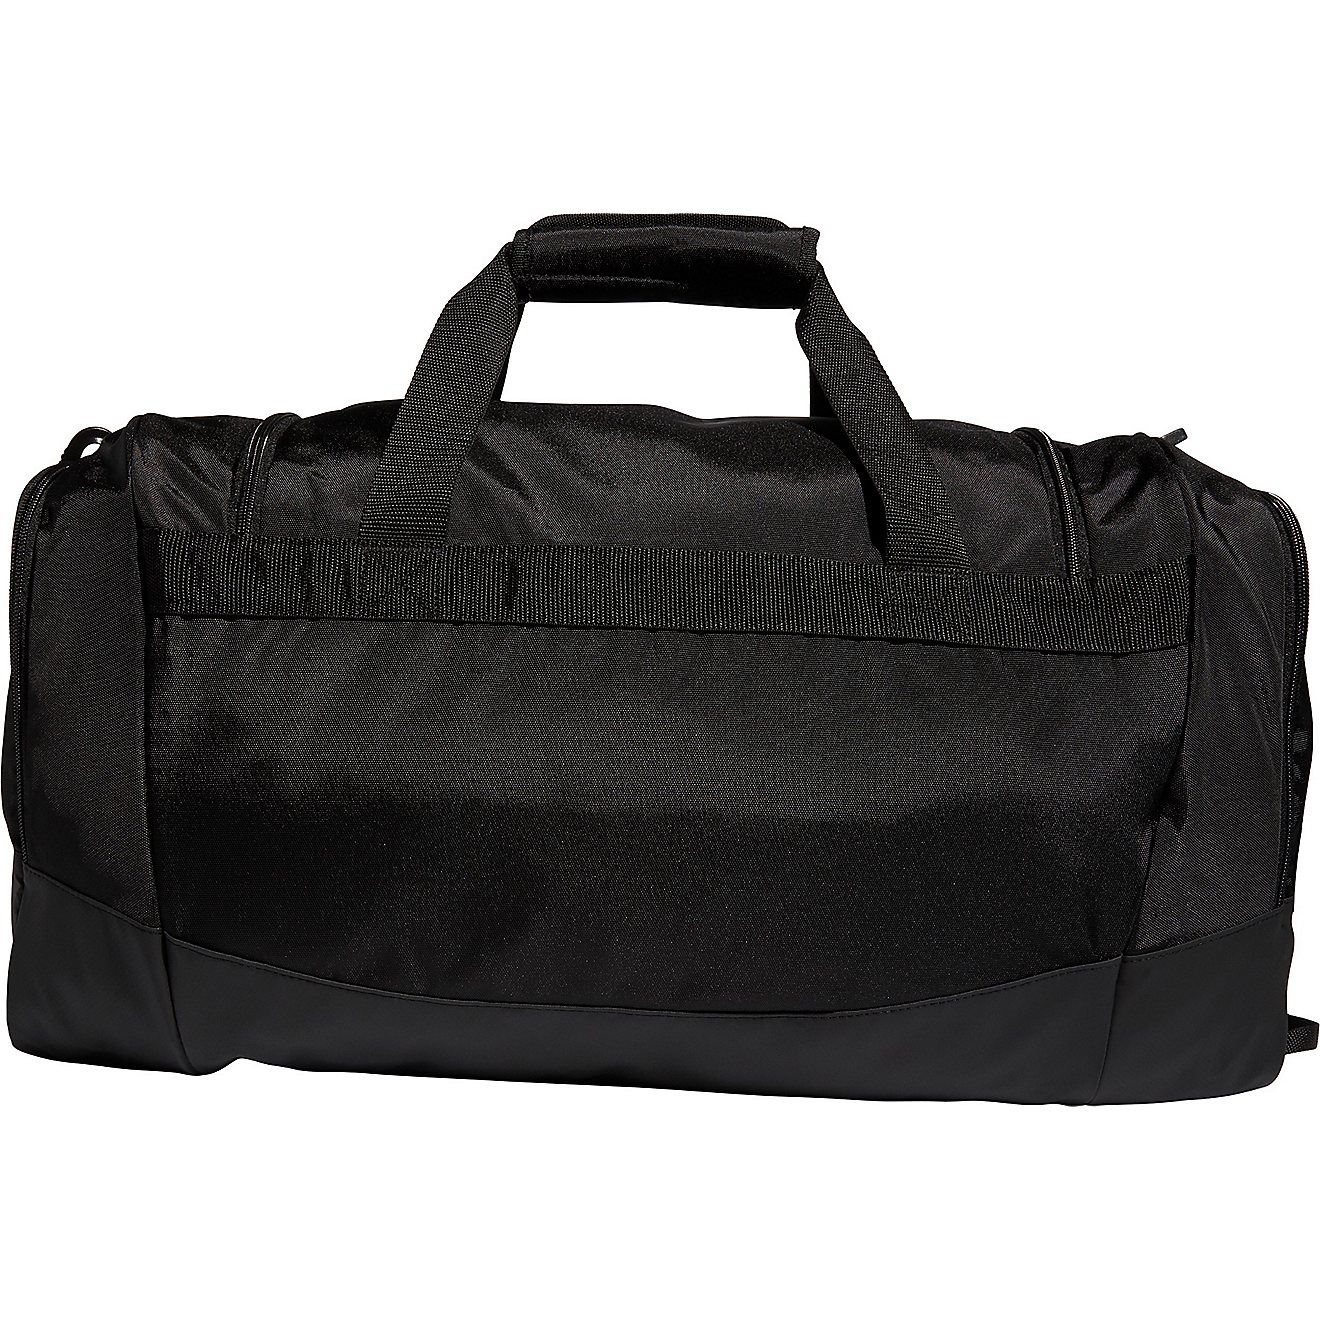 adidas Defender IV Medium Duffel Bag | Free Shipping at Academy